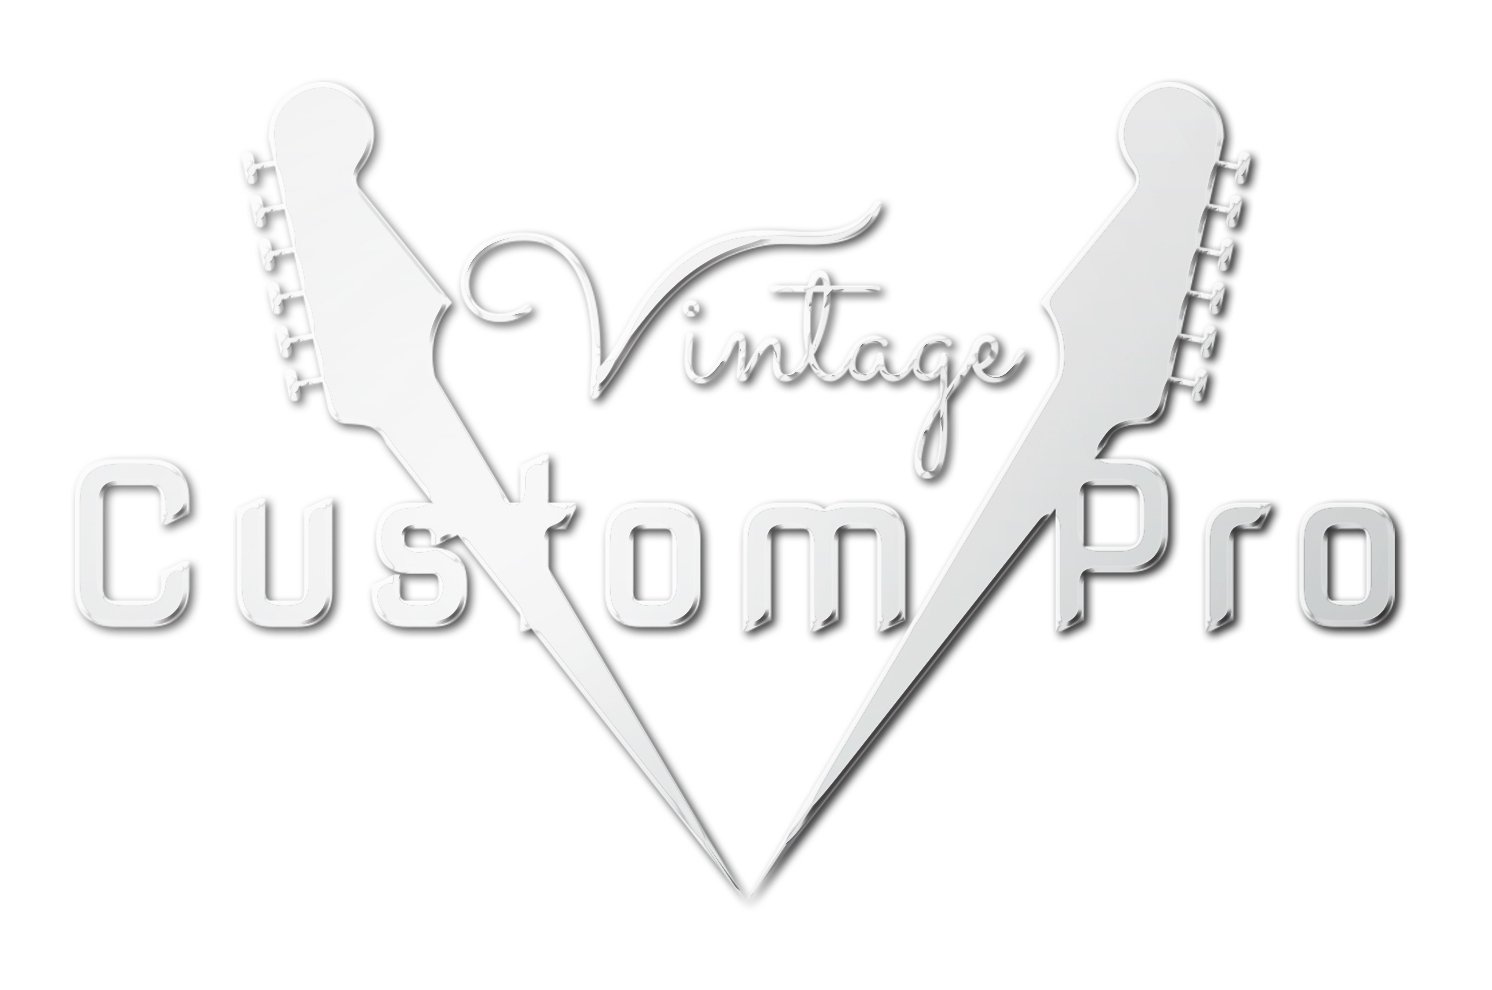 Vintage* VS6CG Electric Guitar, Electric Guitar for sale at Richards Guitars.